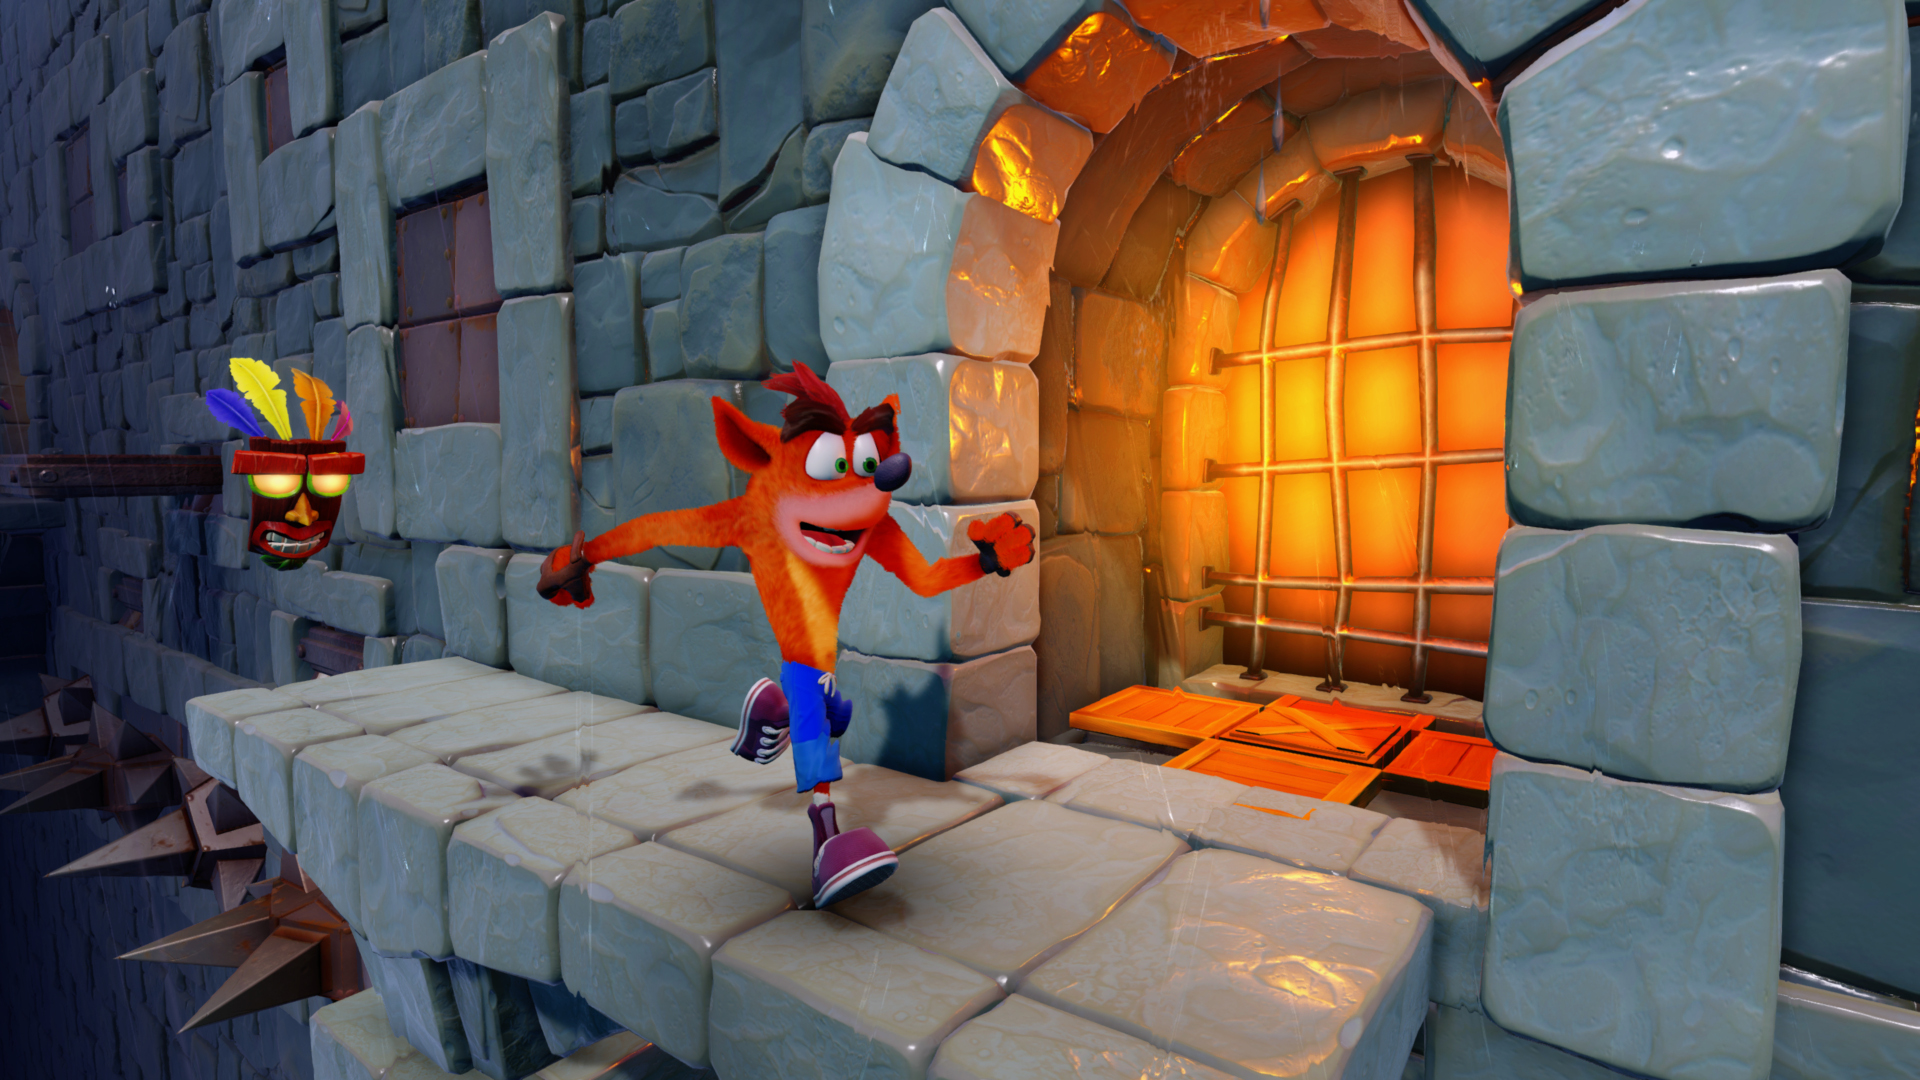 Crash Bandicoot running through a dungeon level